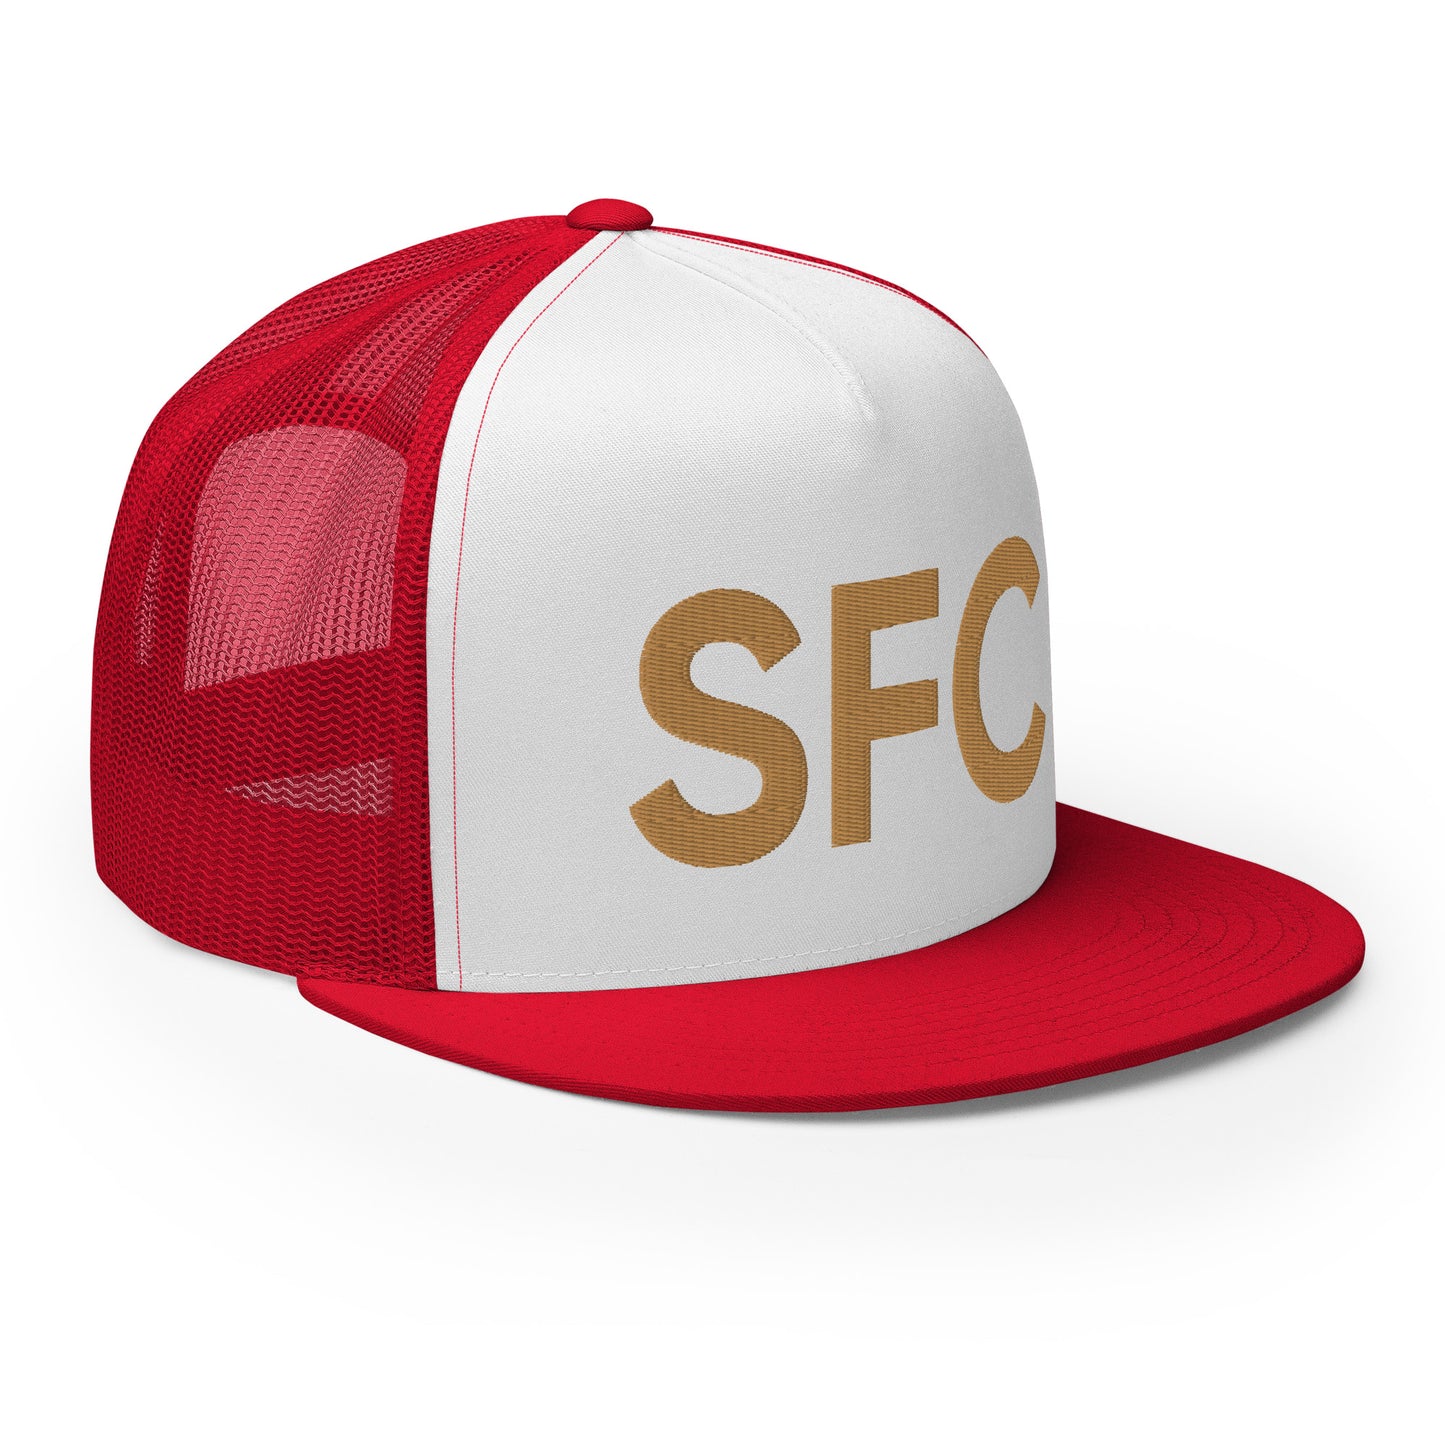 SFC San Francisco Trucker Hat